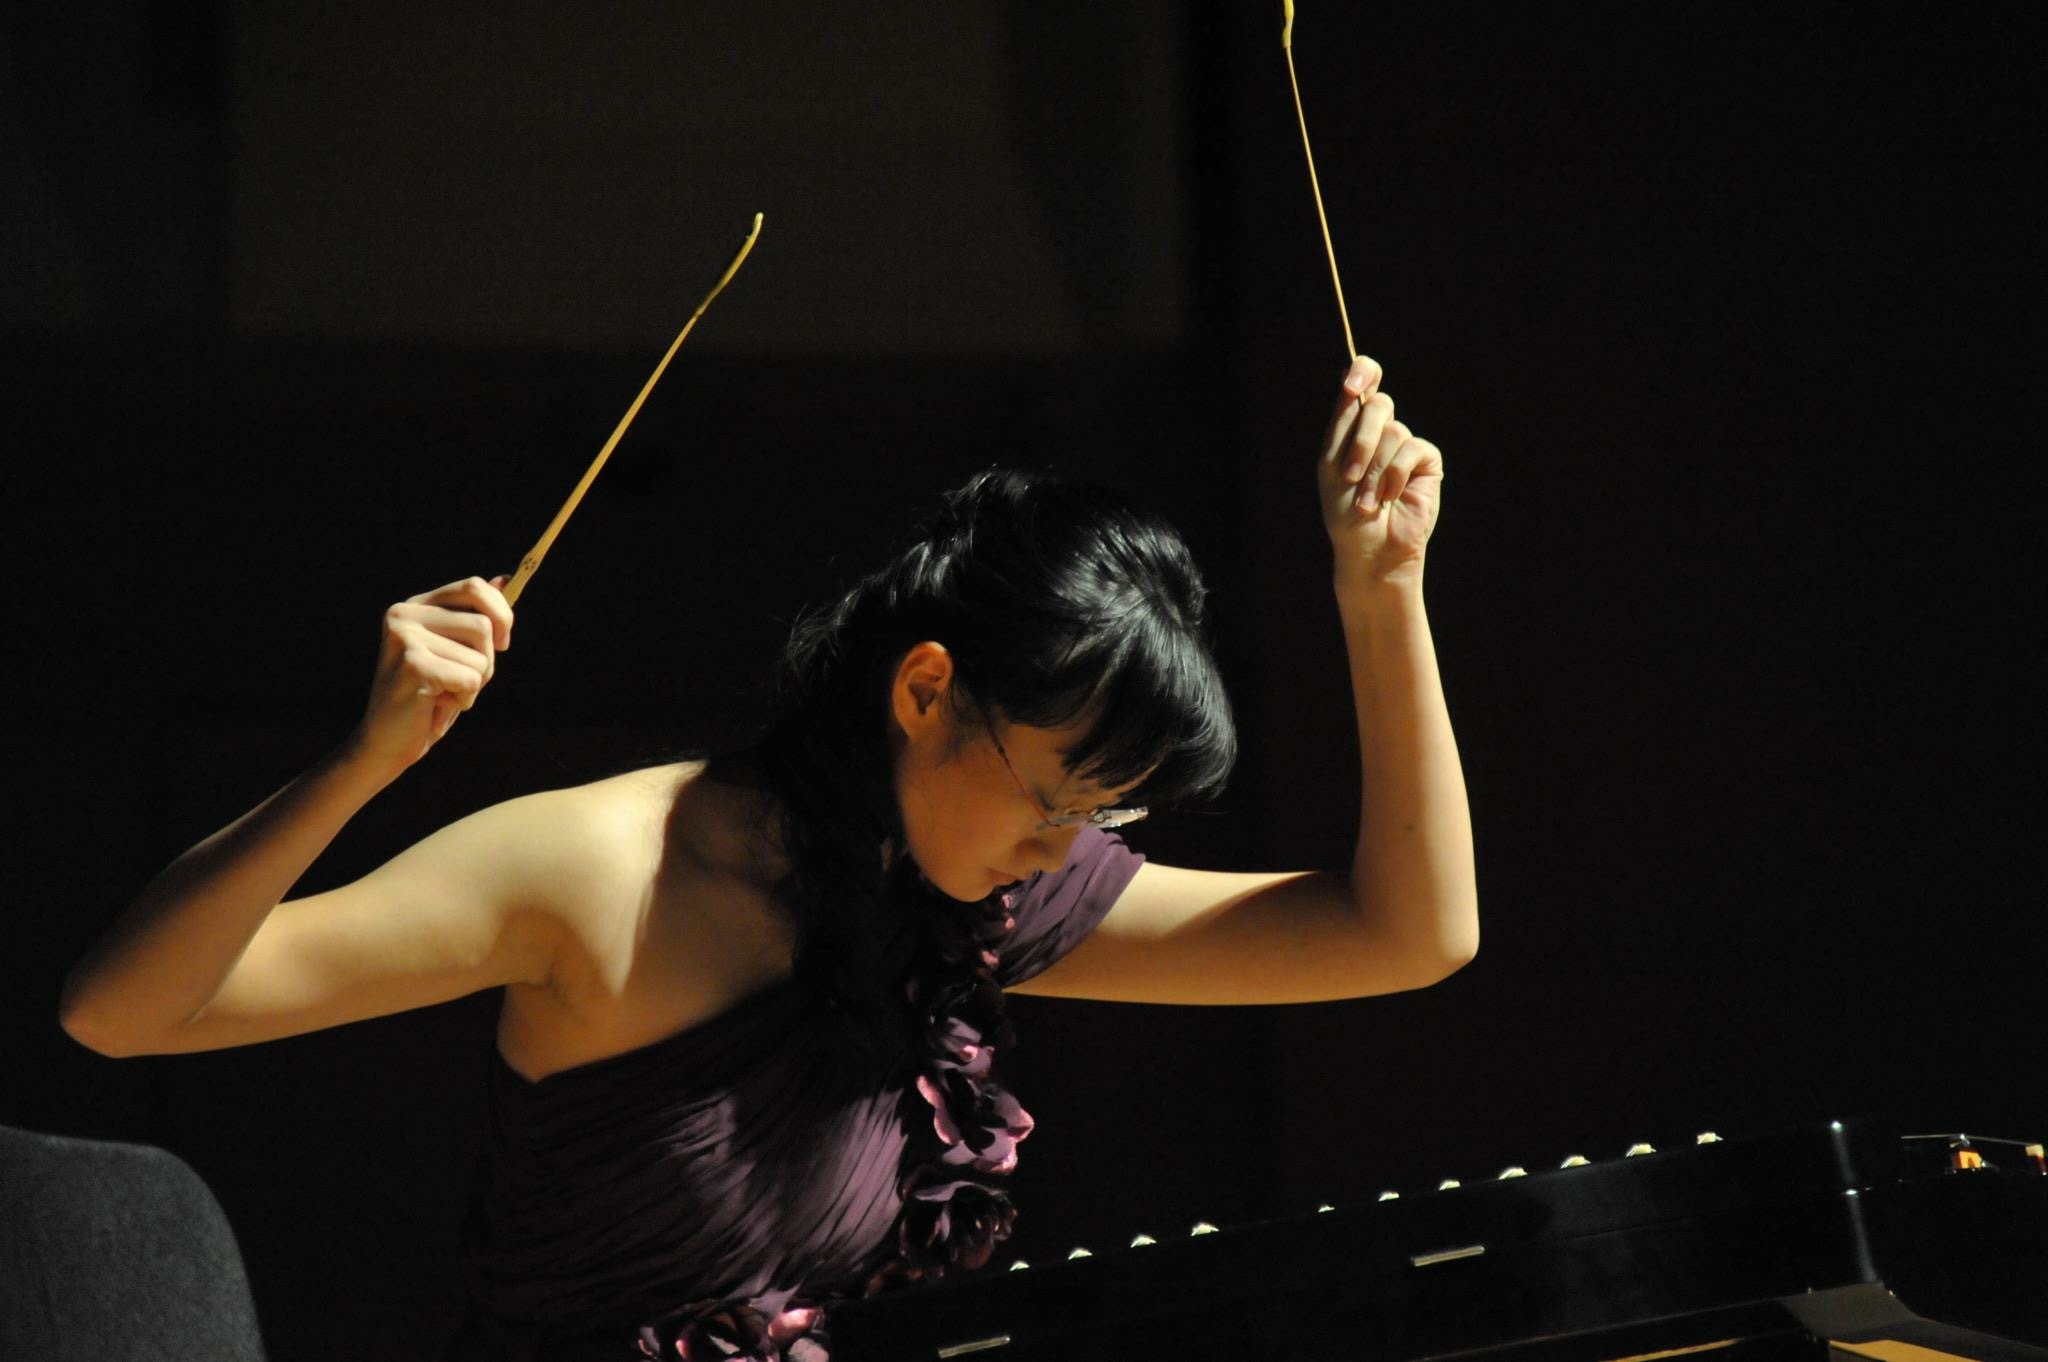 Cheng Jin playing an instrument